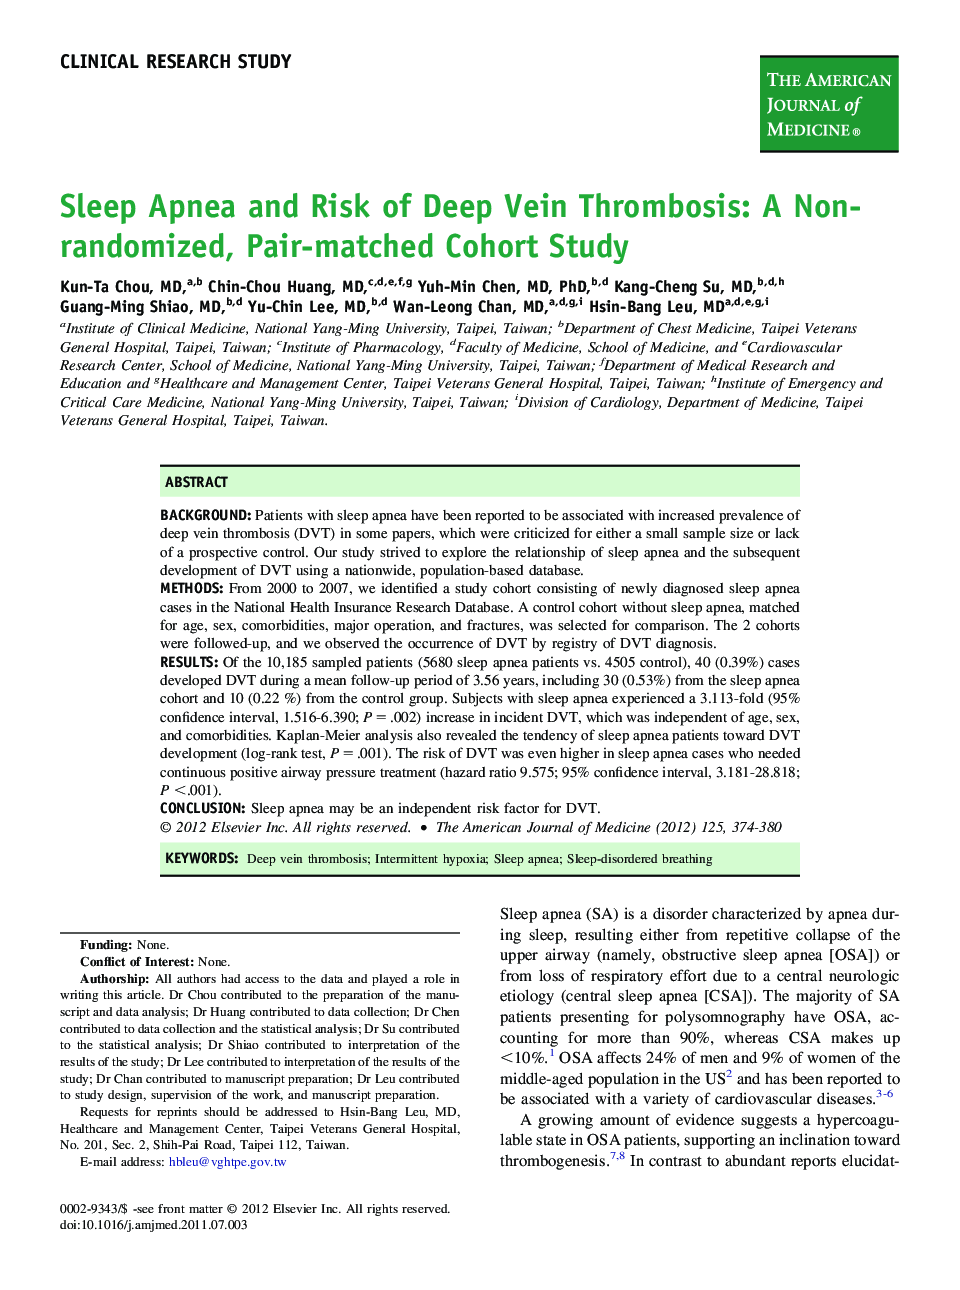 Sleep Apnea and Risk of Deep Vein Thrombosis: A Non-randomized, Pair-matched Cohort Study 